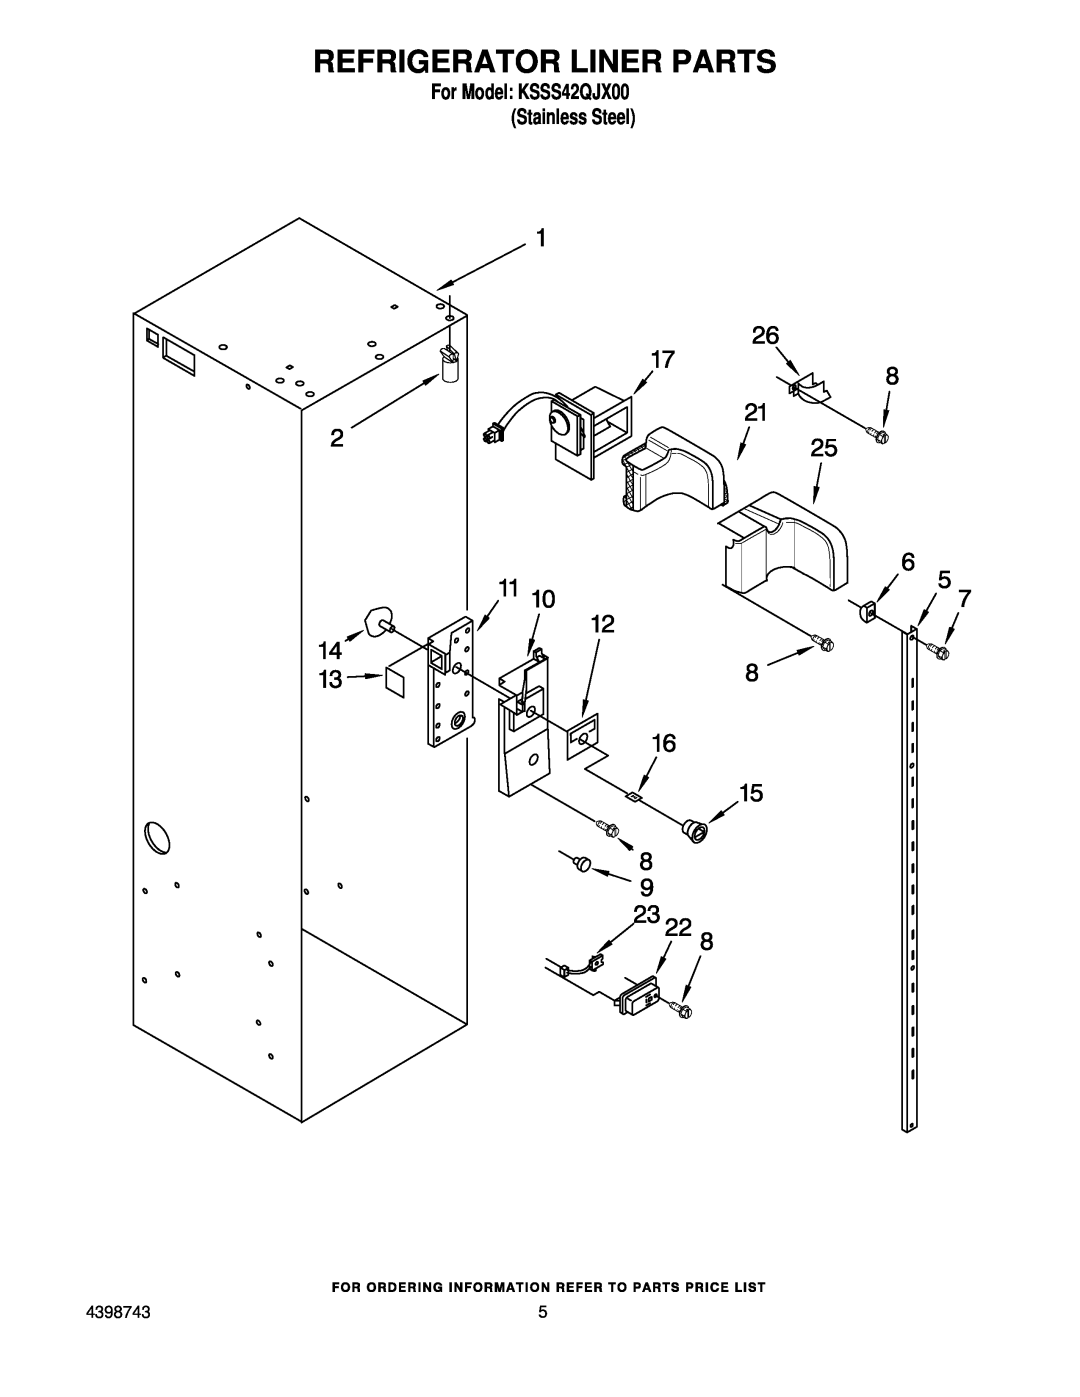 KitchenAid manual Refrigerator Liner Parts, For Model KSSS42QJX00 Stainless Steel 